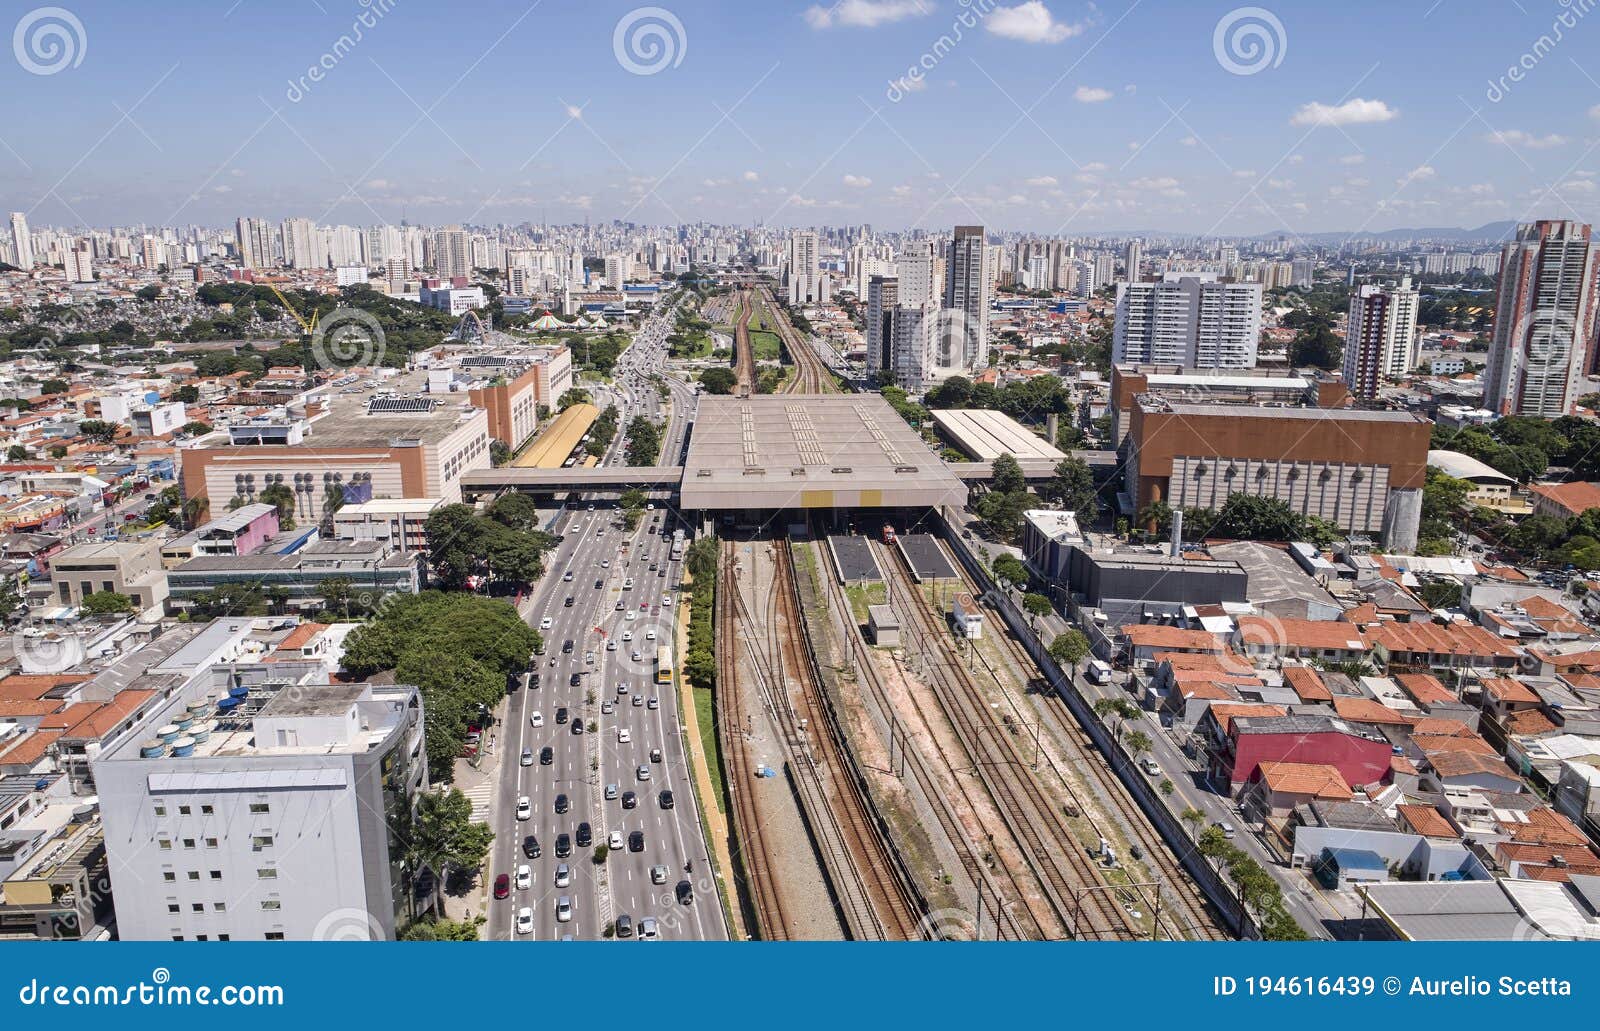 radial leste avenue in the district of tatuape. sao paulo city